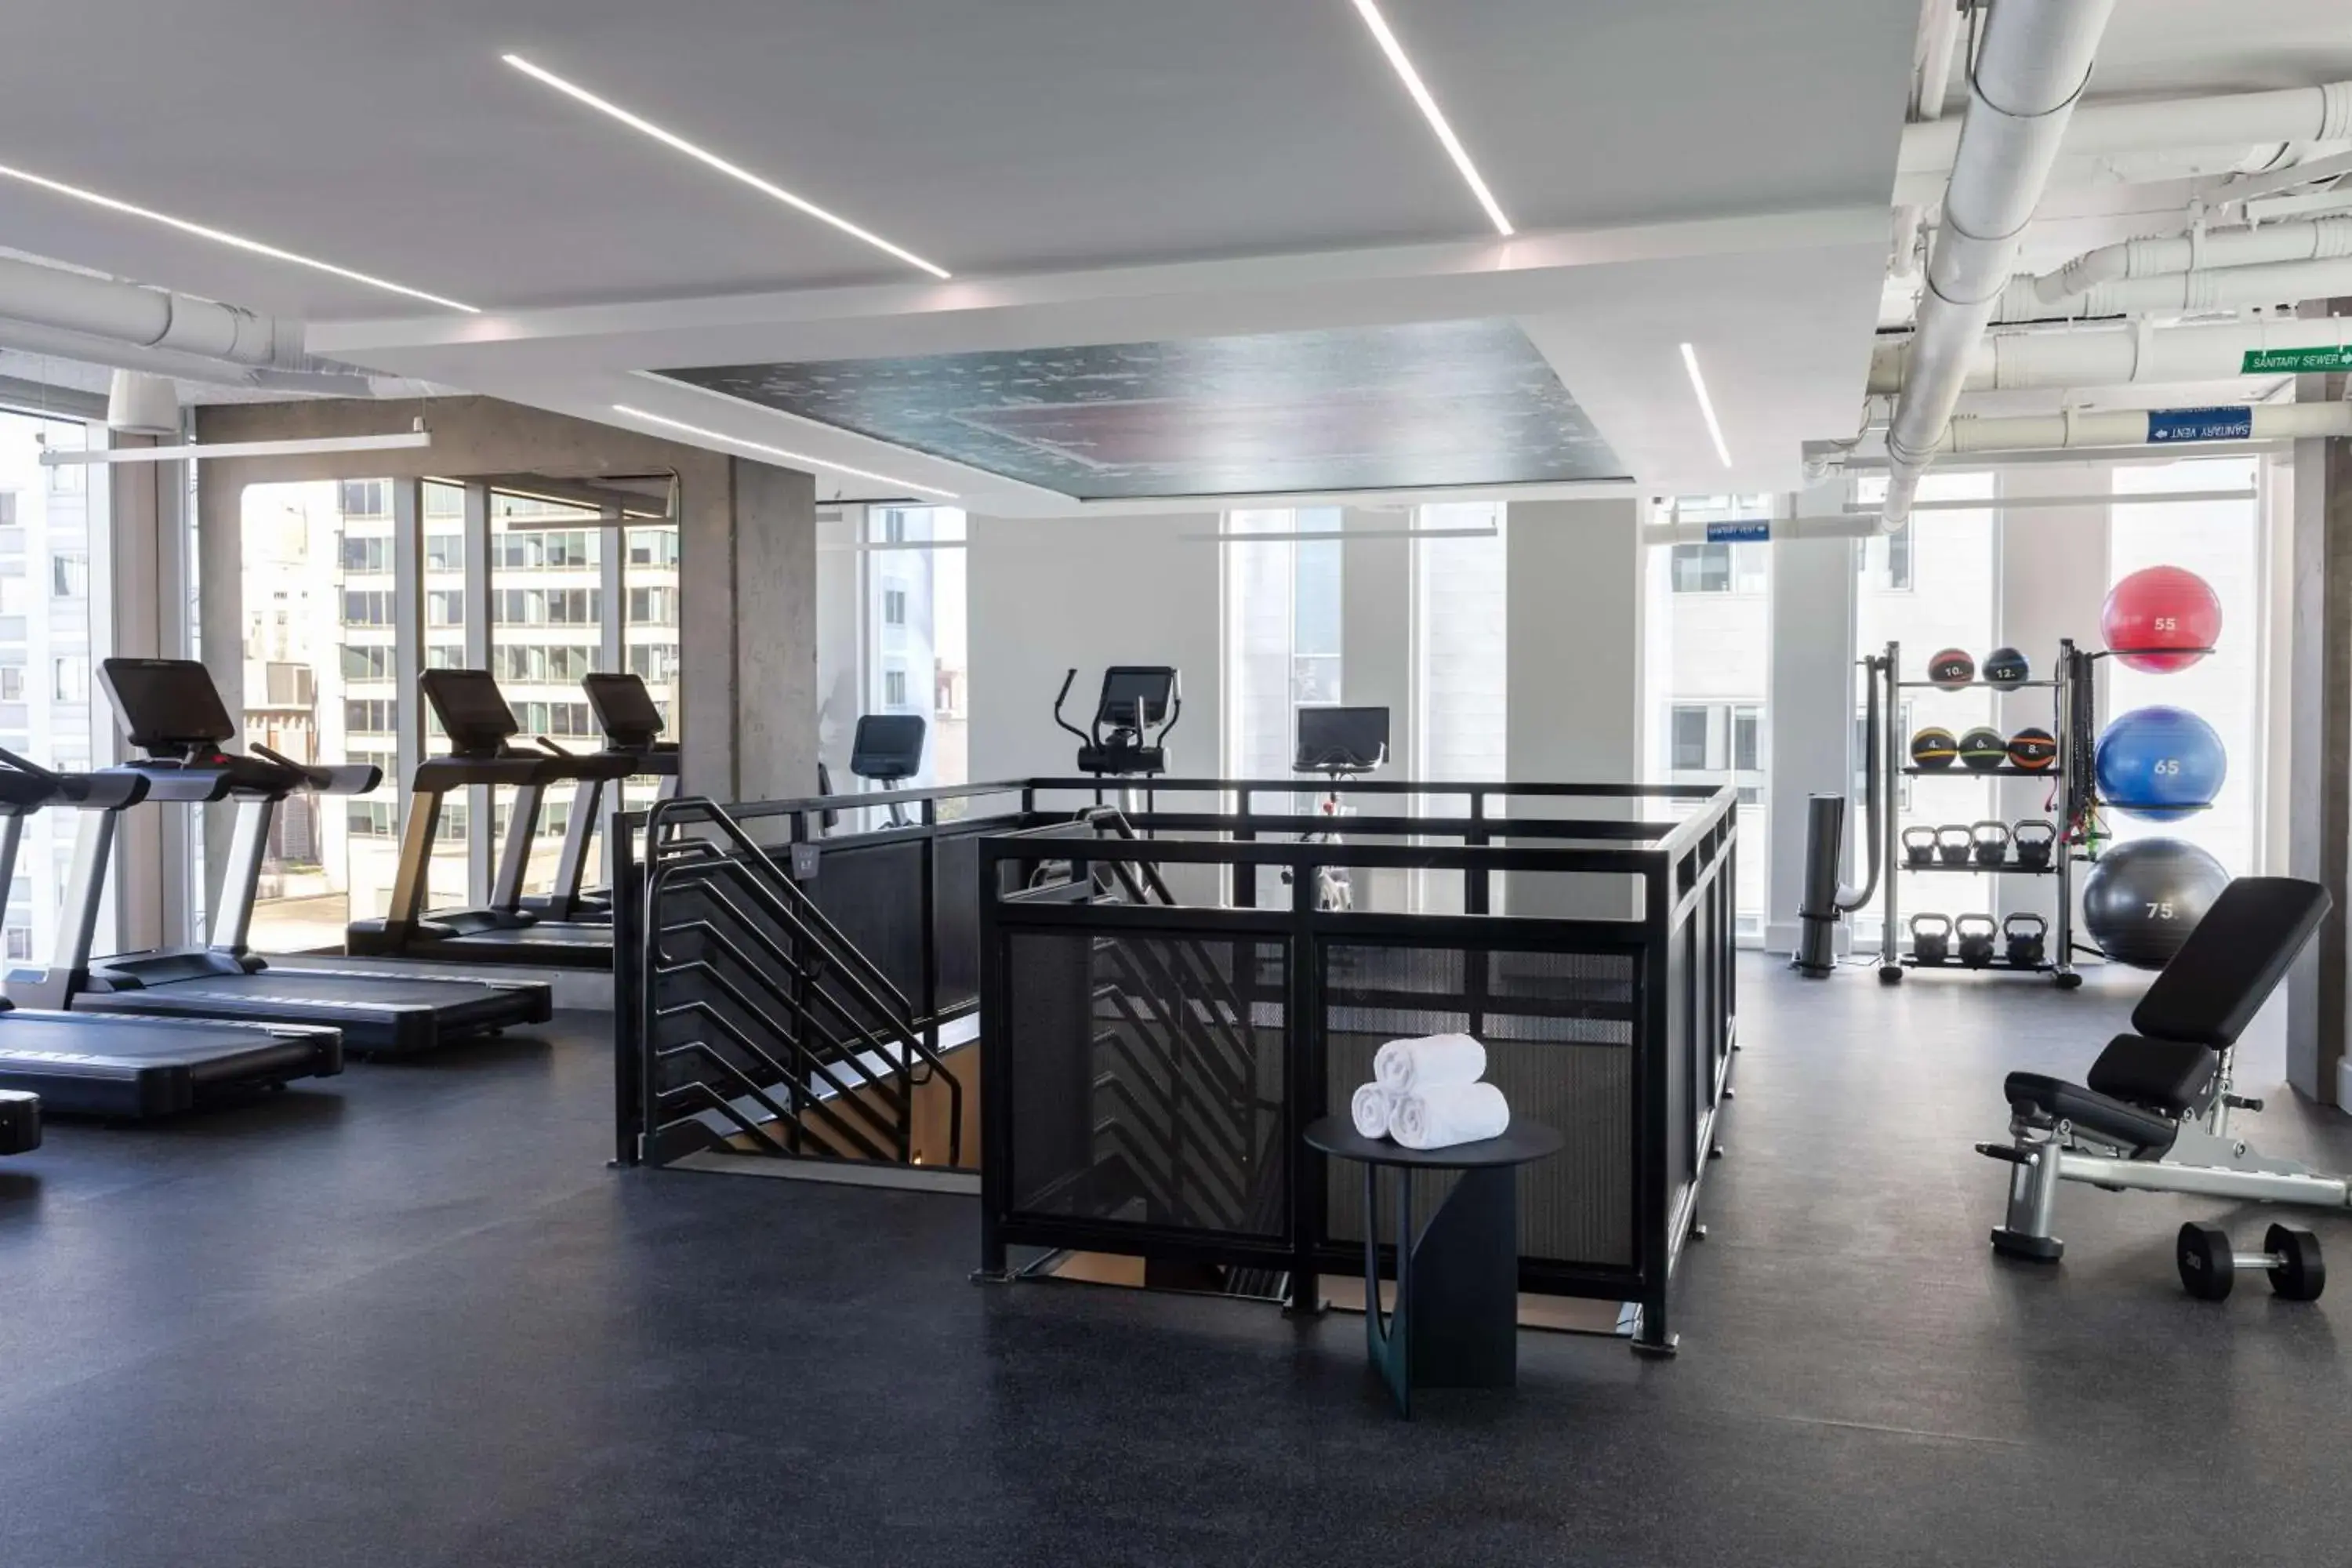 Fitness centre/facilities, Fitness Center/Facilities in Hyatt Centric Congress Avenue Austin